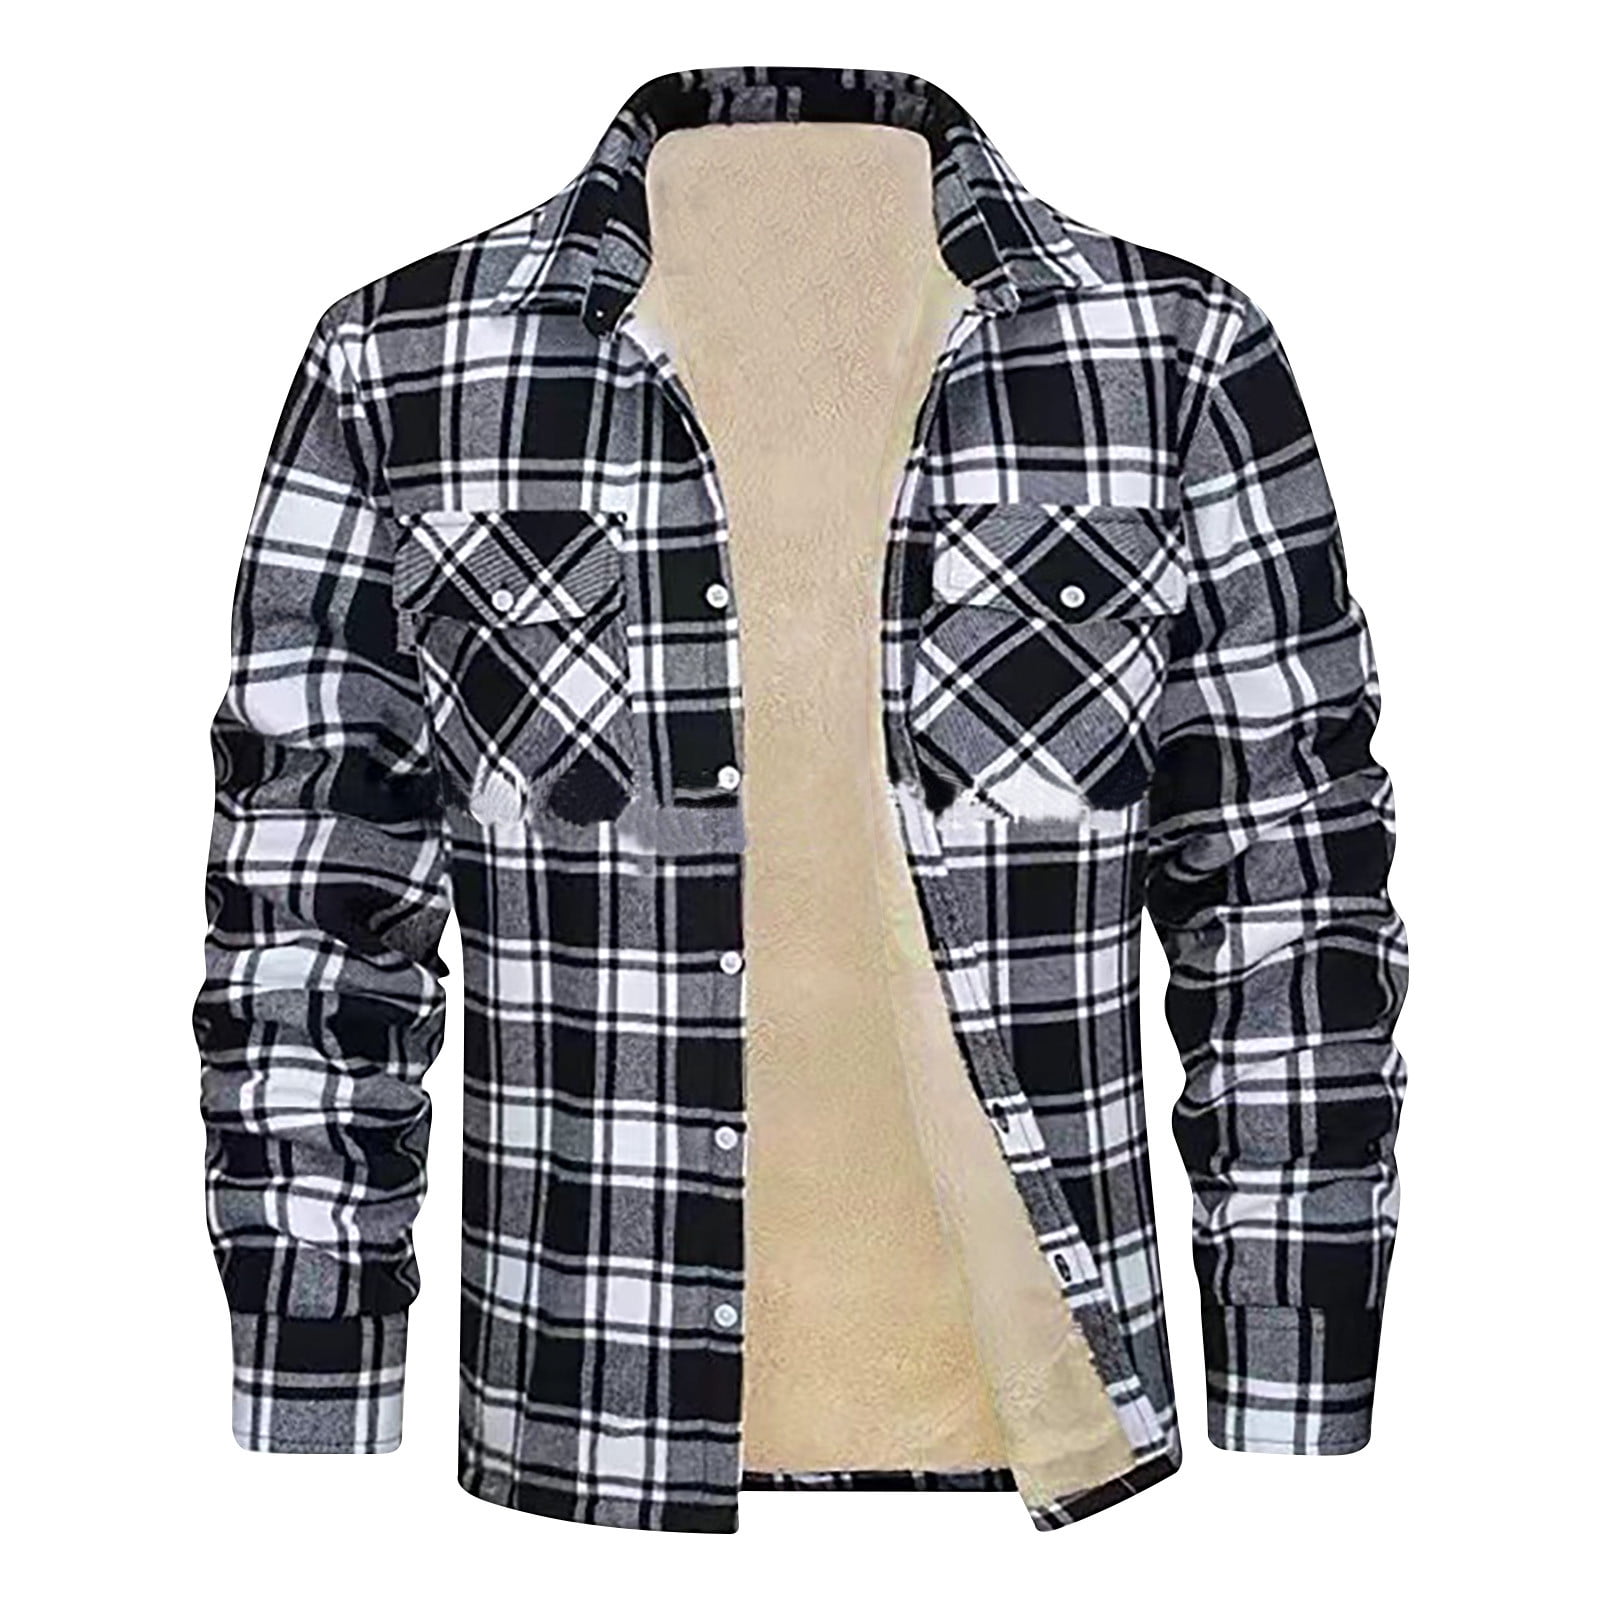 Hvyesh Plaid Fleece Shirt Jacket for Men Big and Tall Sherpa-Lined ...